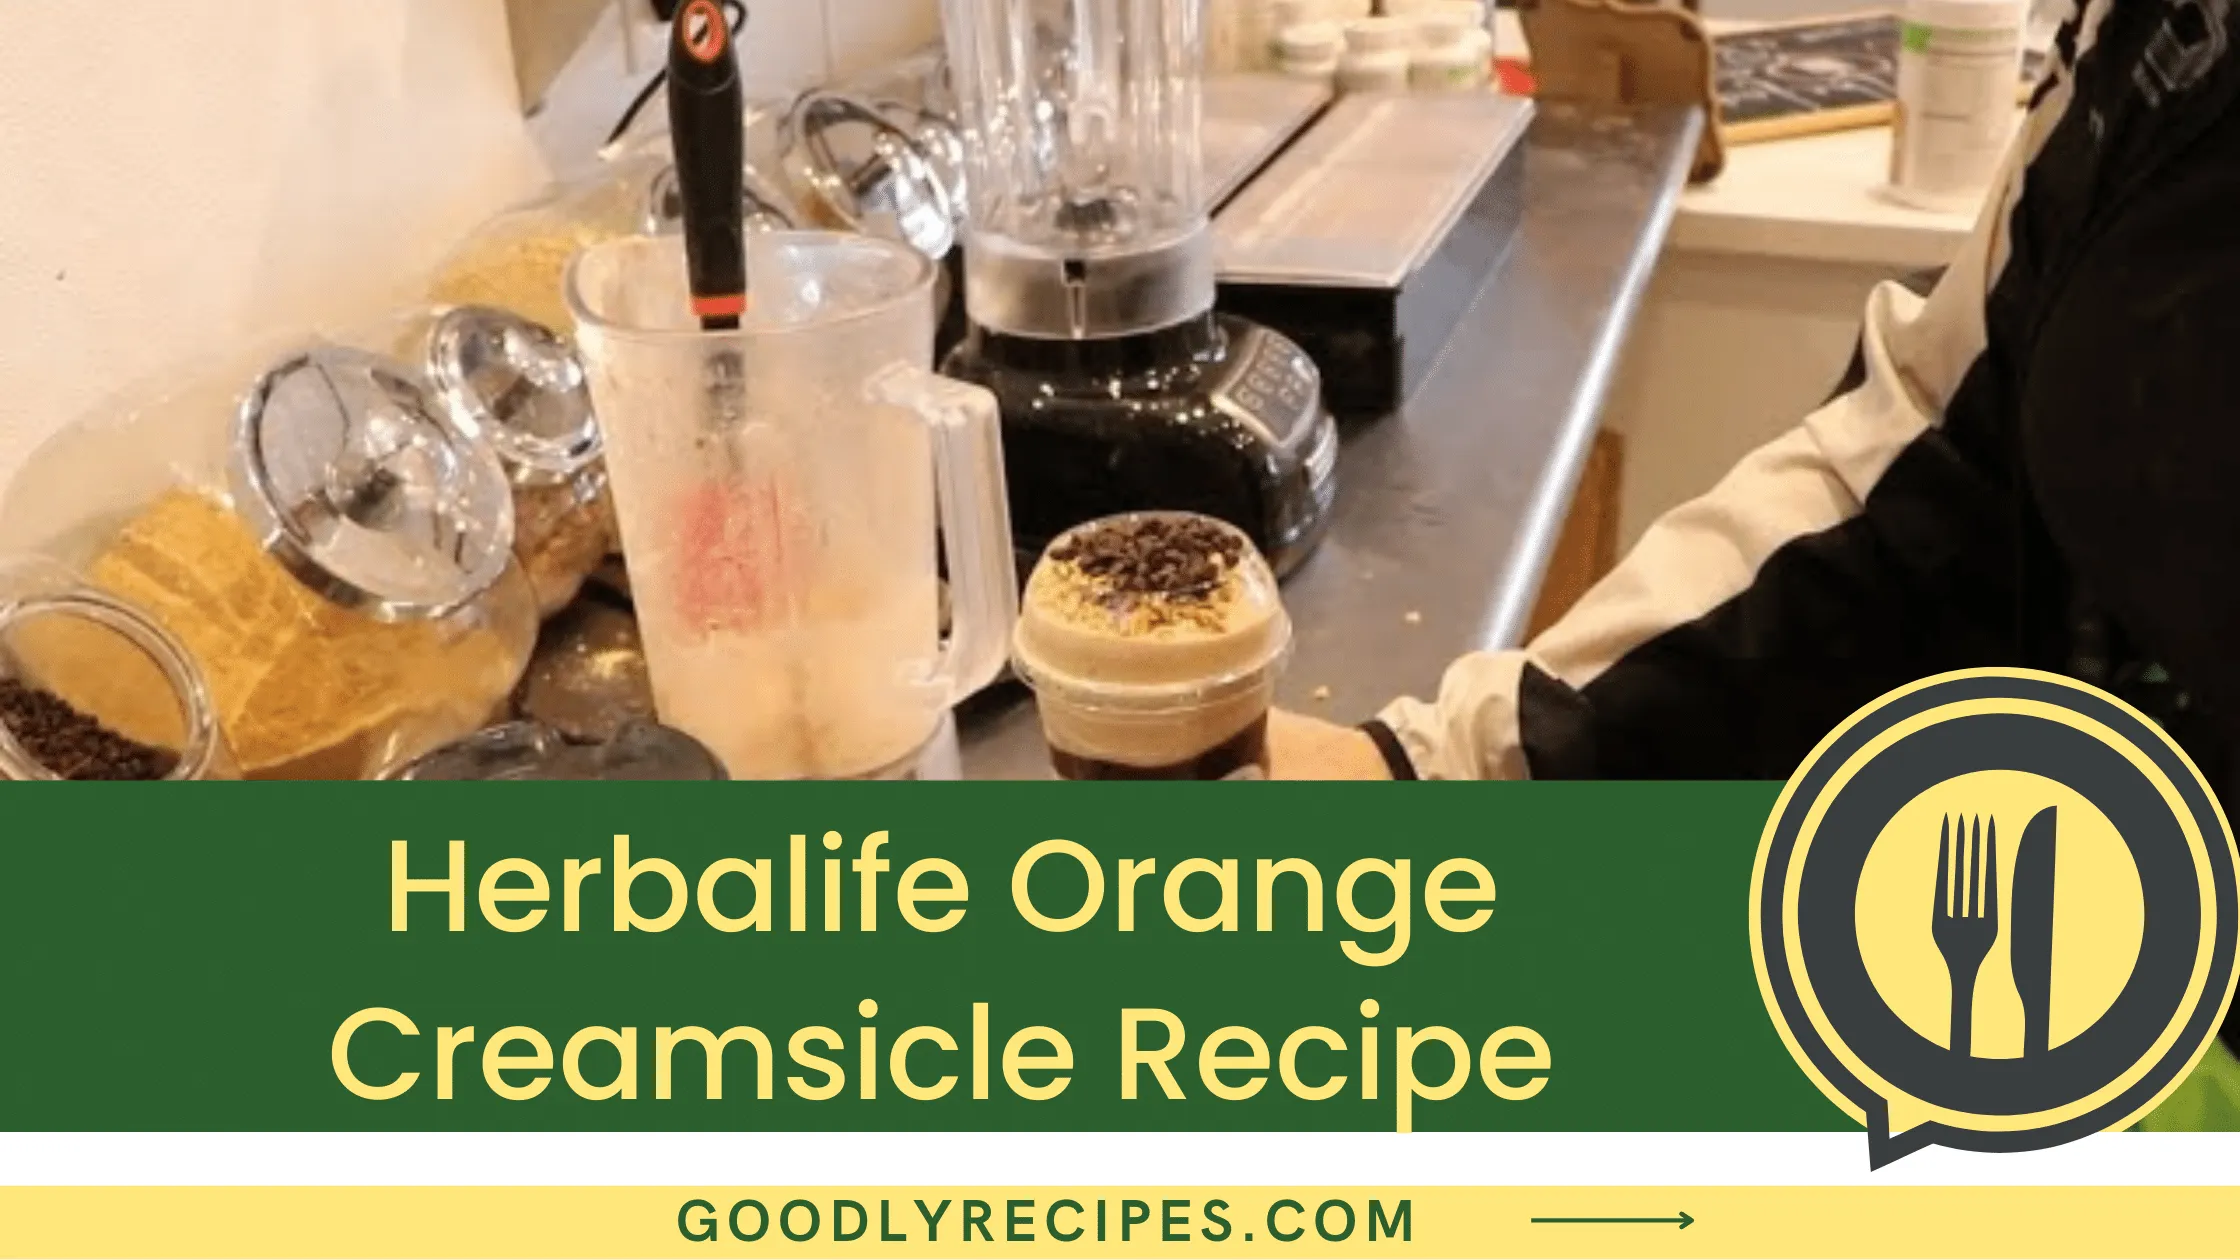 Herbalife Orange Creamsicle Recipe